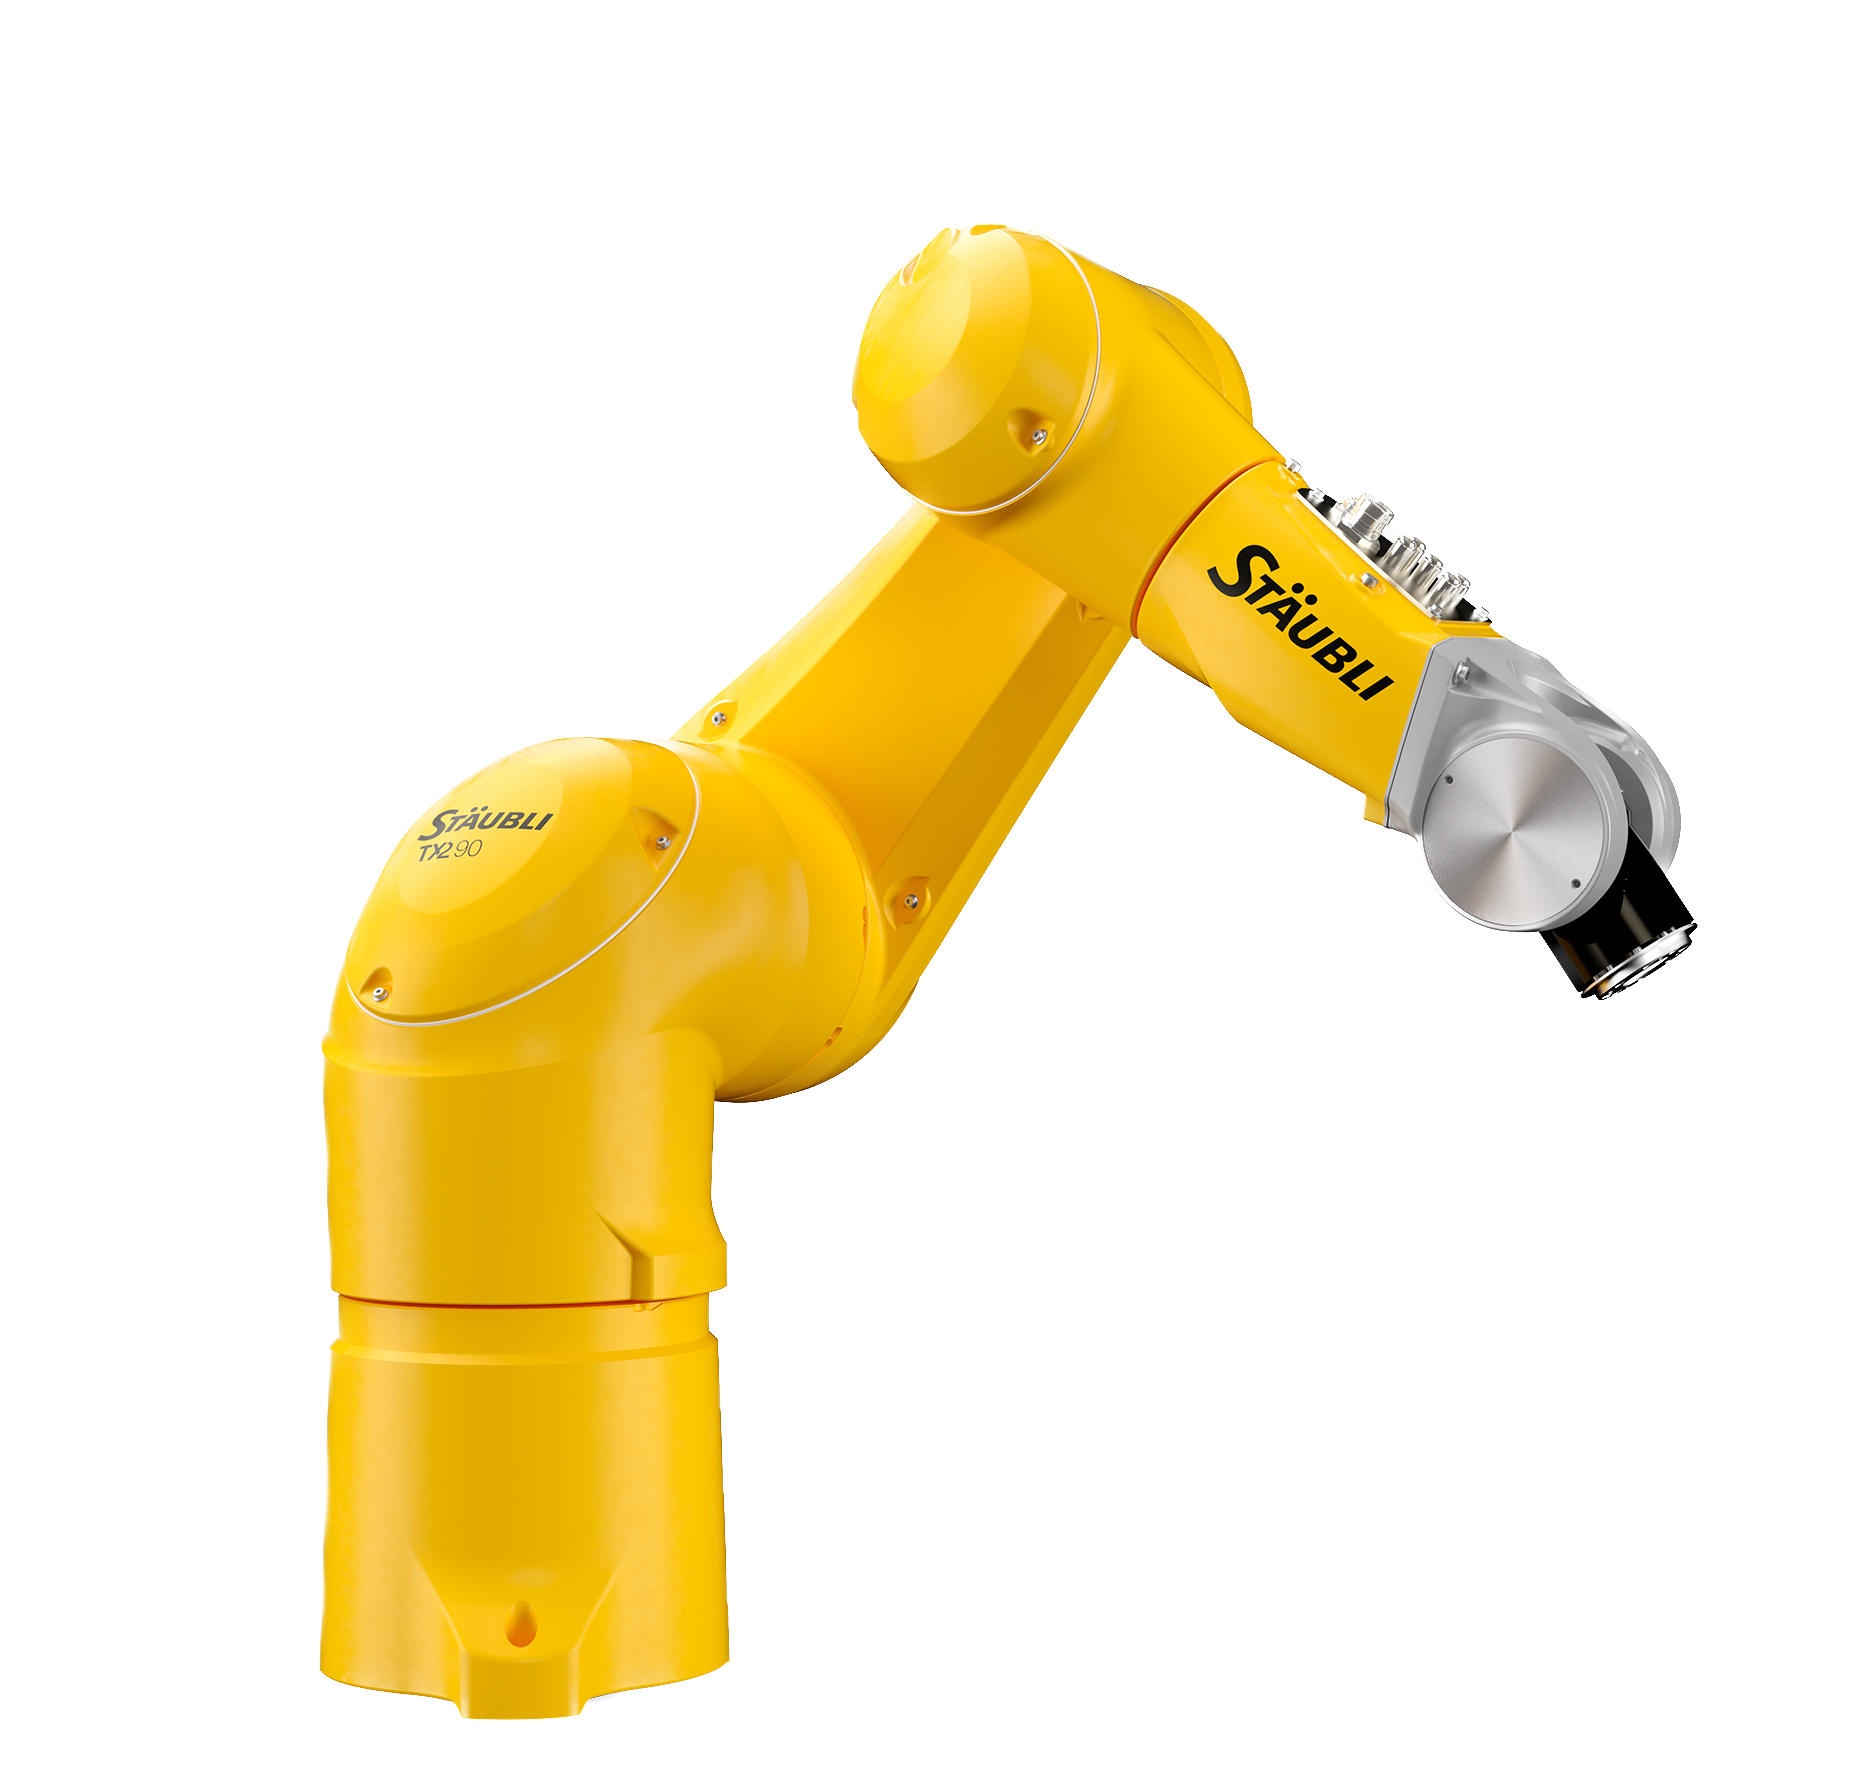 Industrial Robot Staubli TX2-90